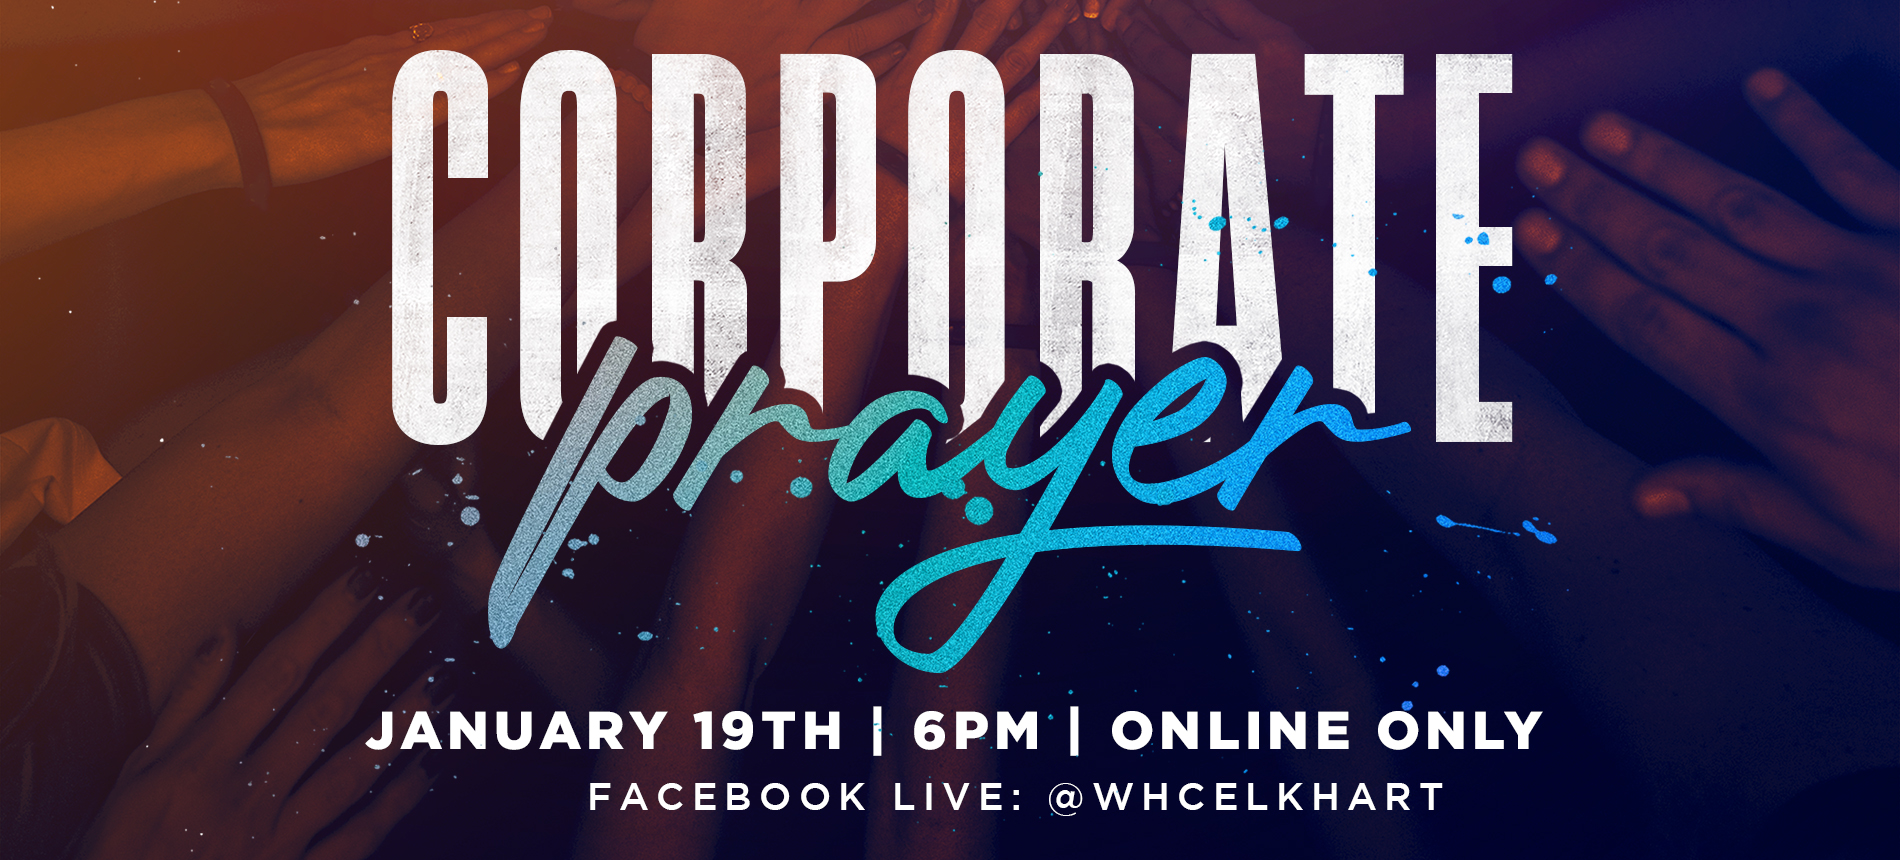 Corporate Prayer Beginning January 12th 6PM Facebook LIVE: @WHCELKHART